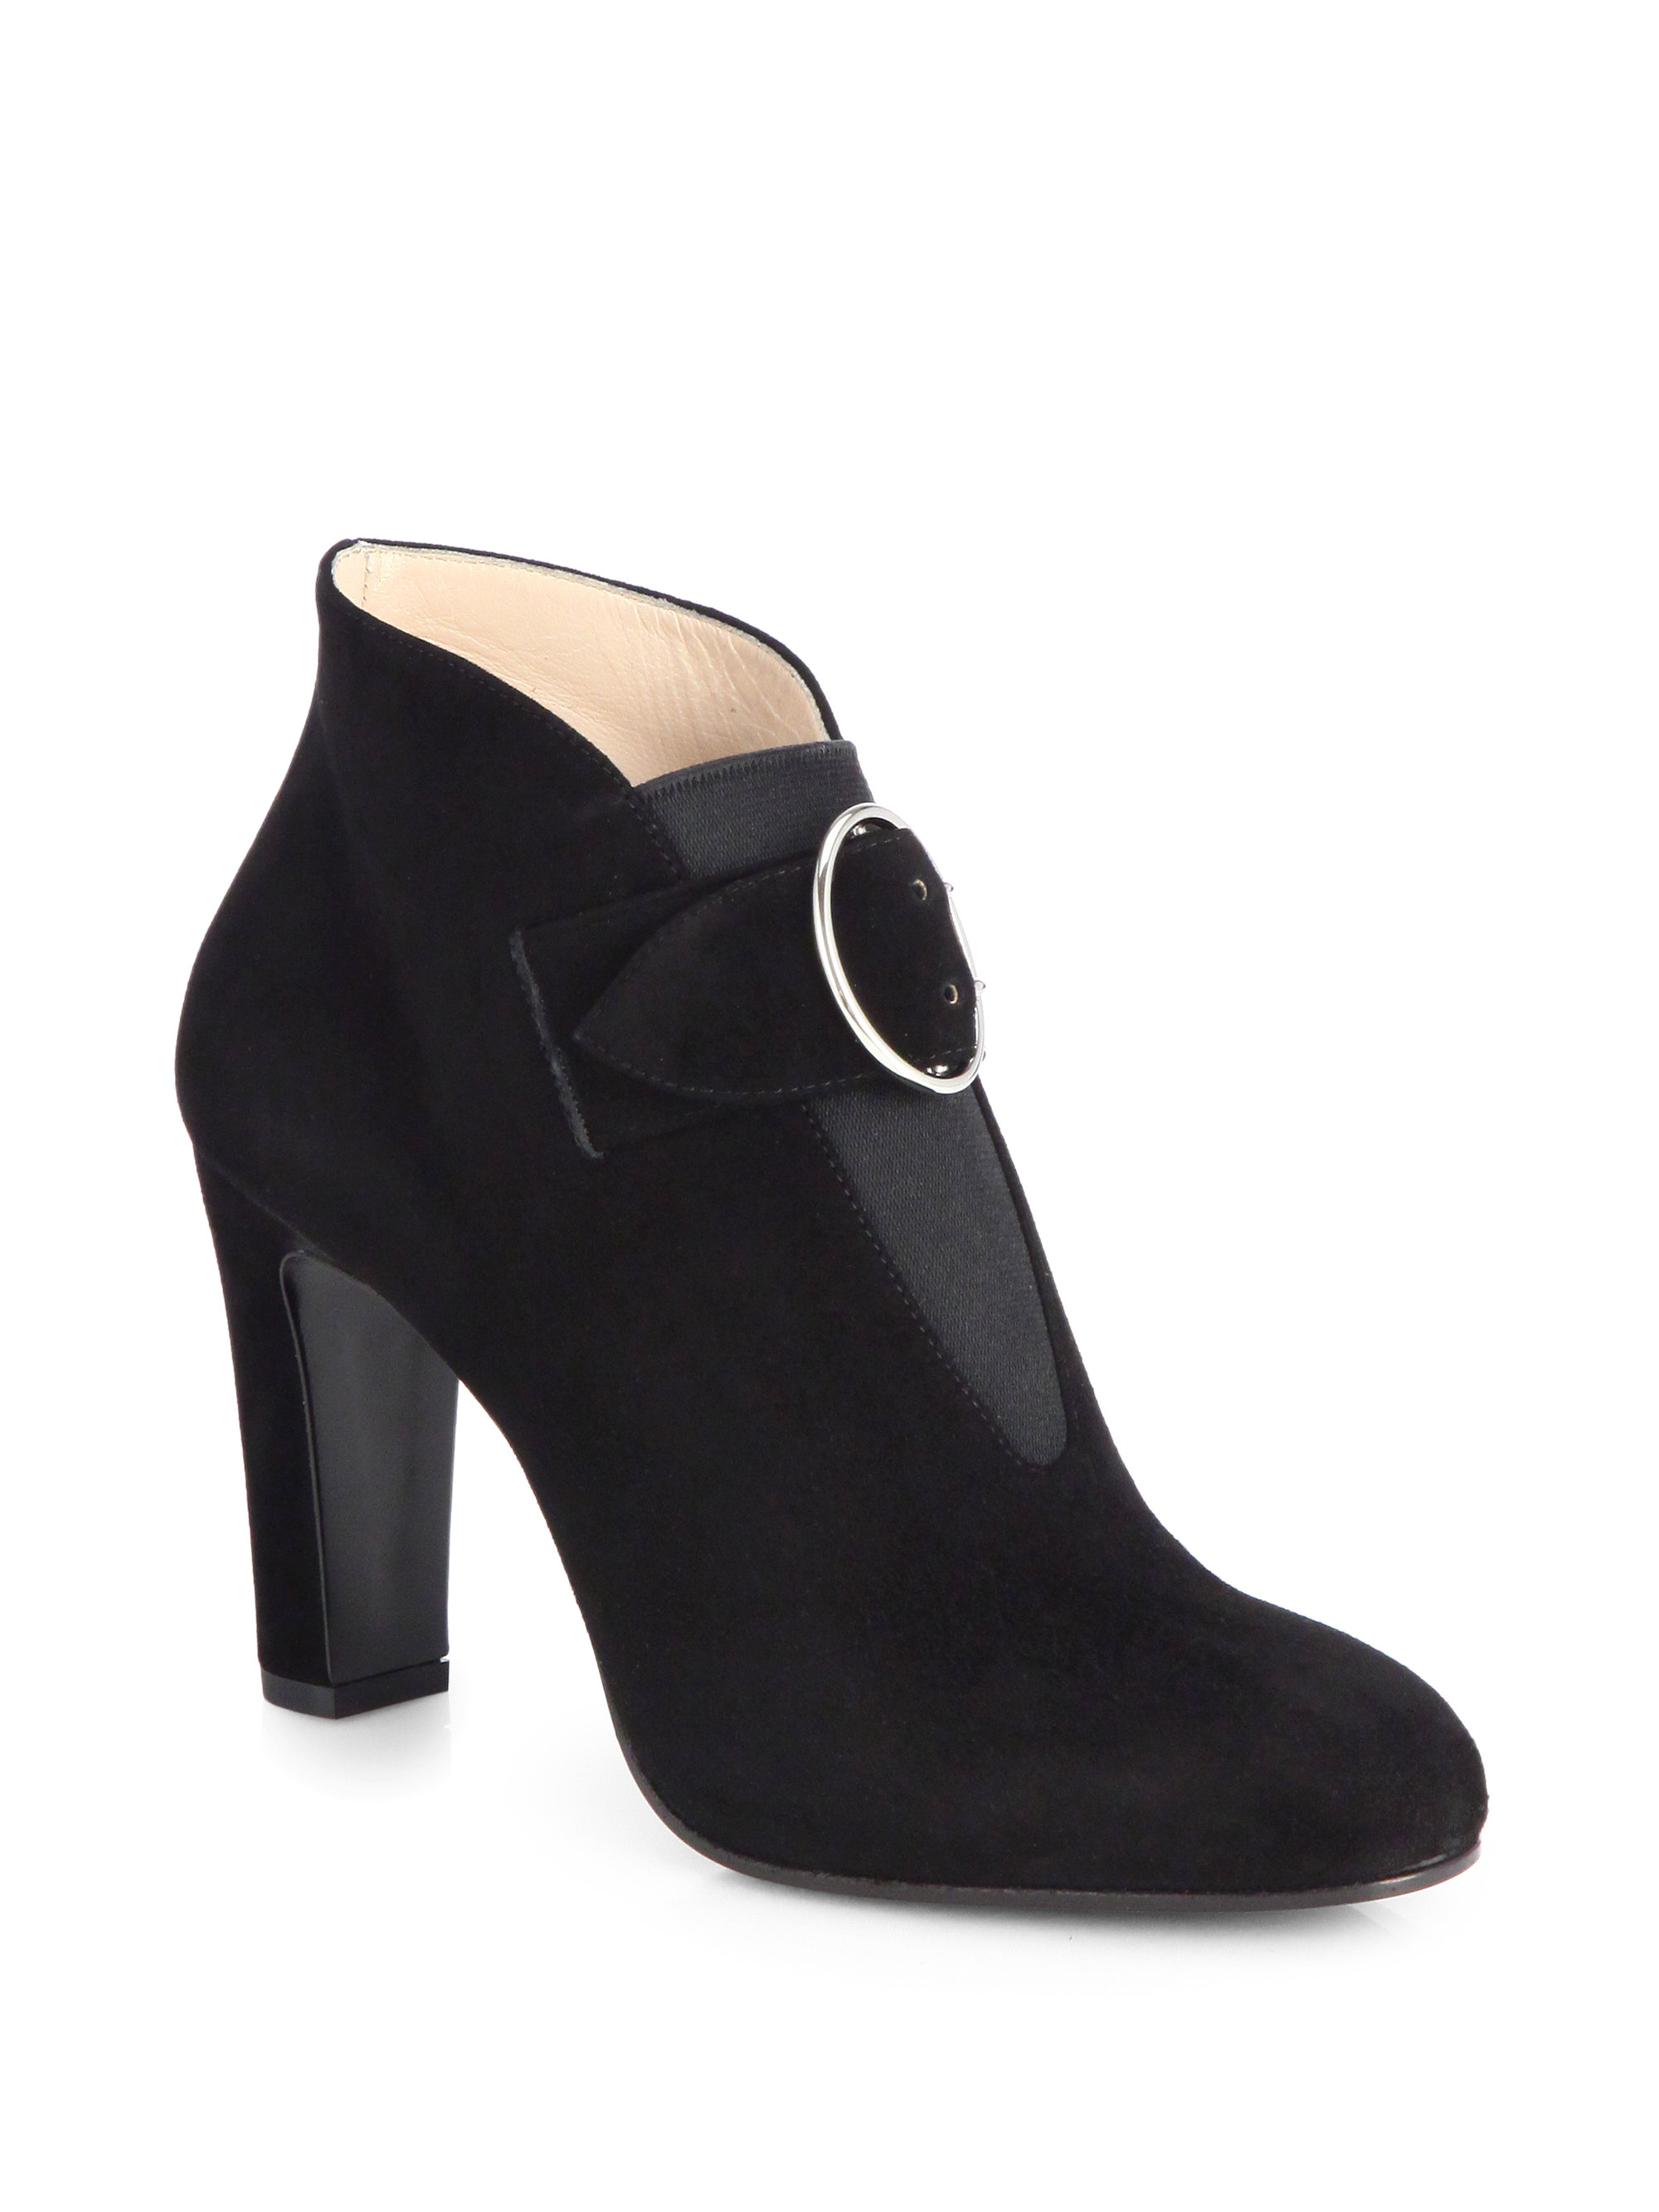 Prada Suede Buckle Ankle Boots in Black (NERO-BLACK) | Lyst